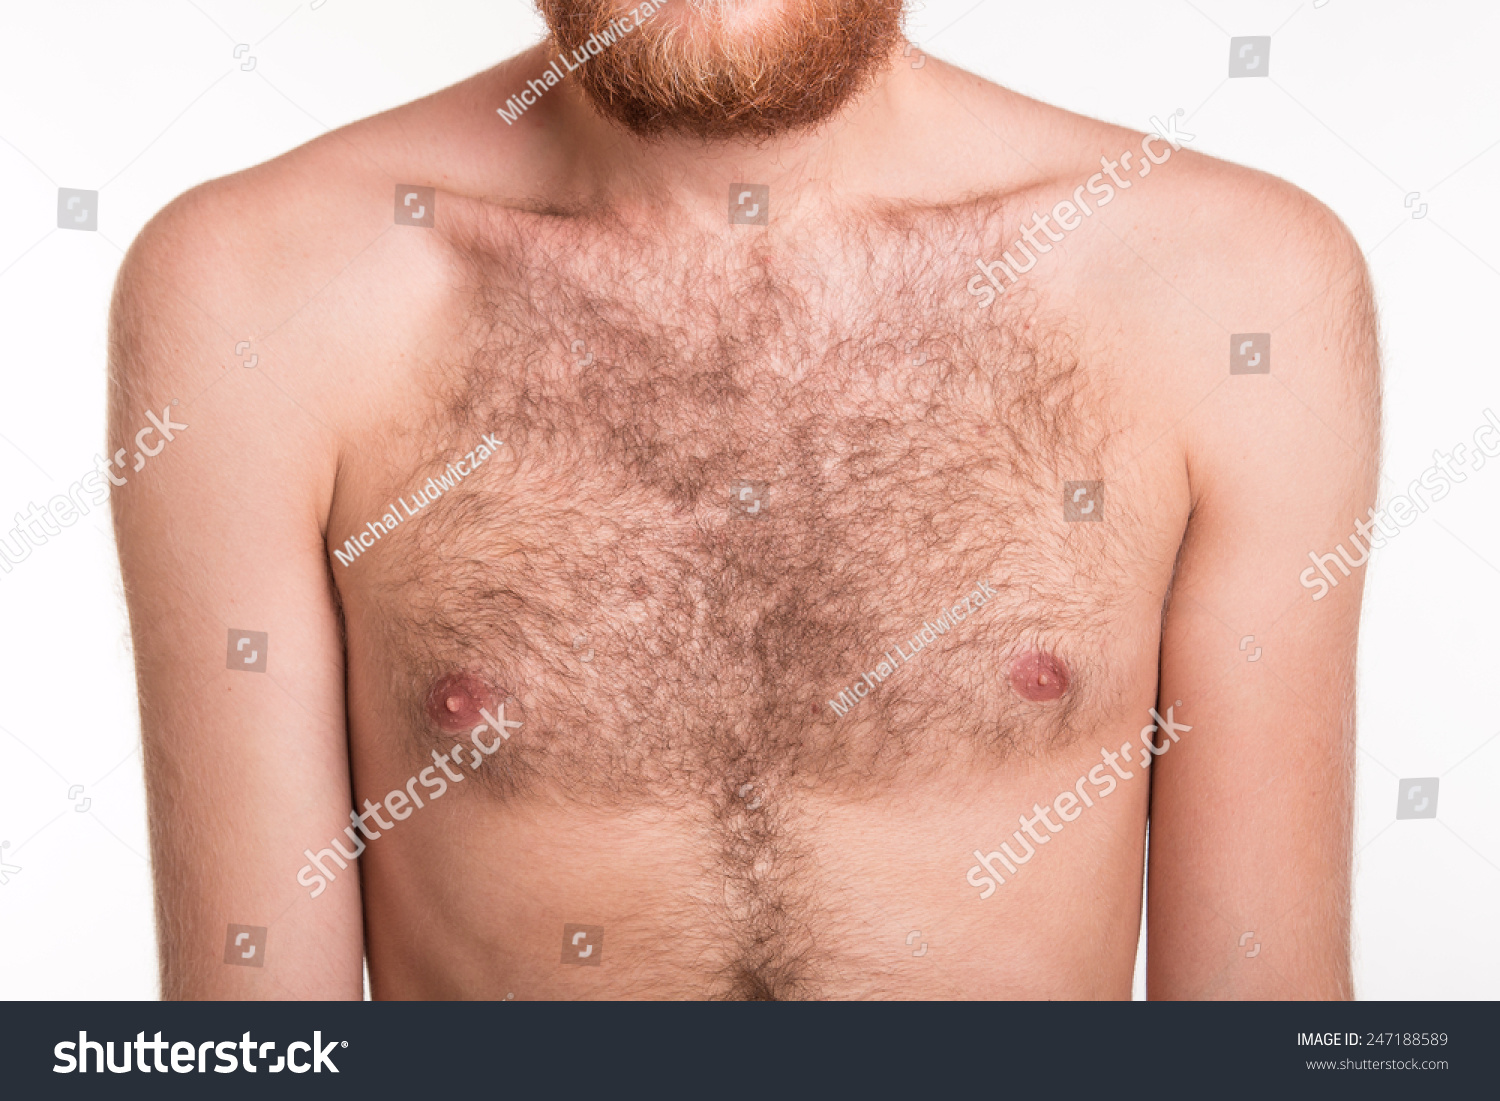 депиляция волос на груди у мужчин фото 14